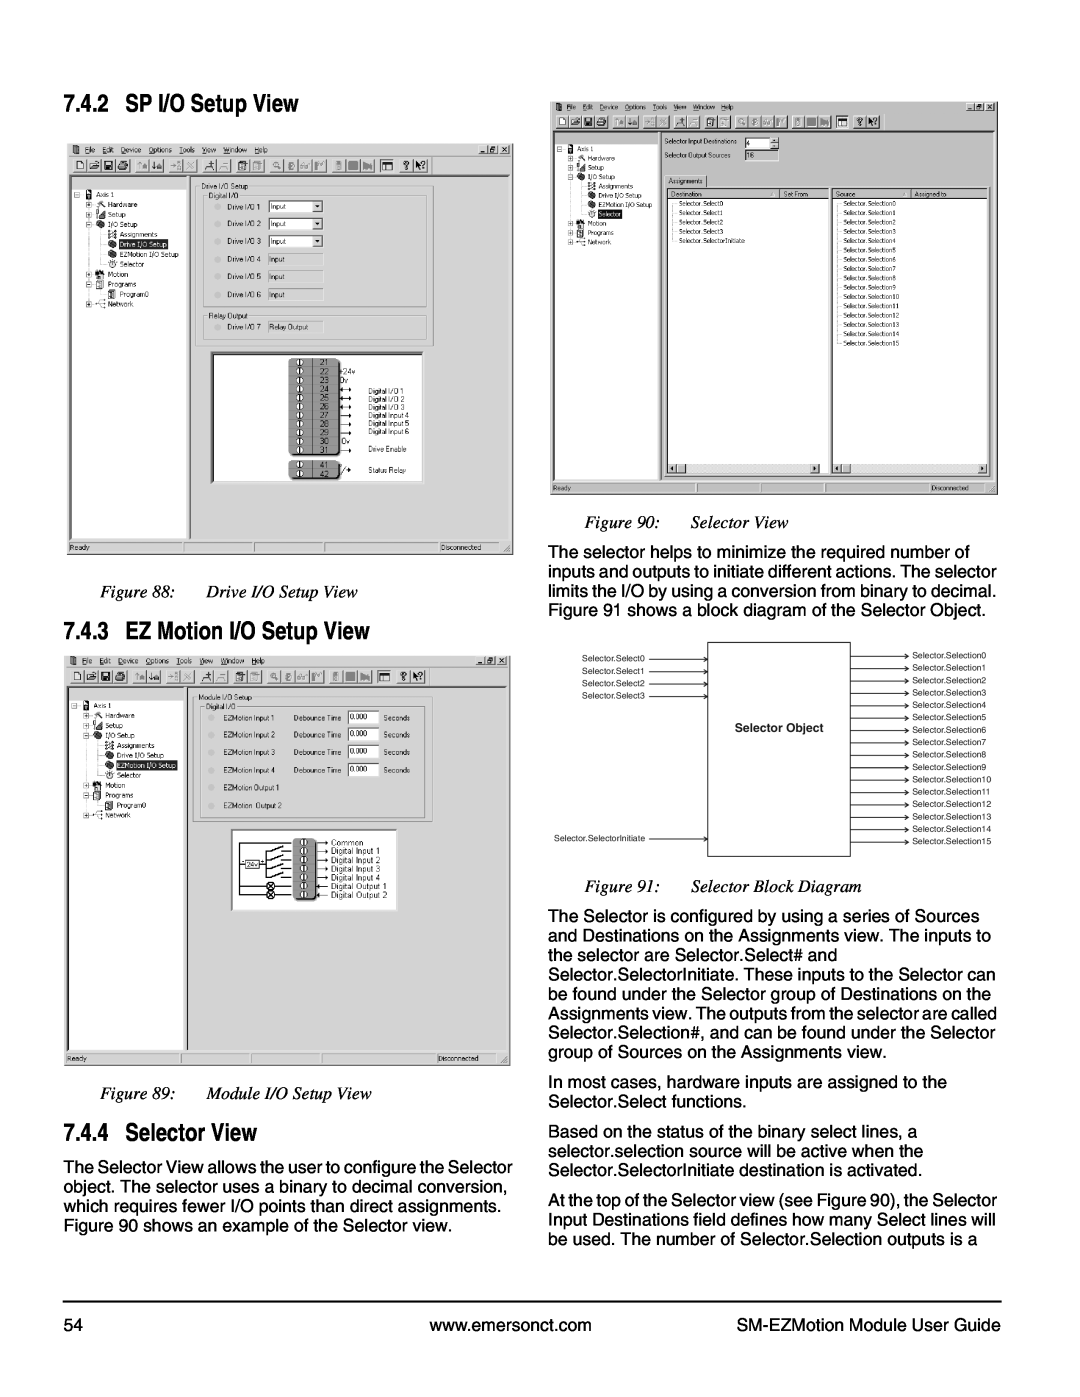 Emerson P/N 400361-00 manual SP I/O Setup View, EZ Motion I/O Setup View, Selector View, Drive I/O Setup View 